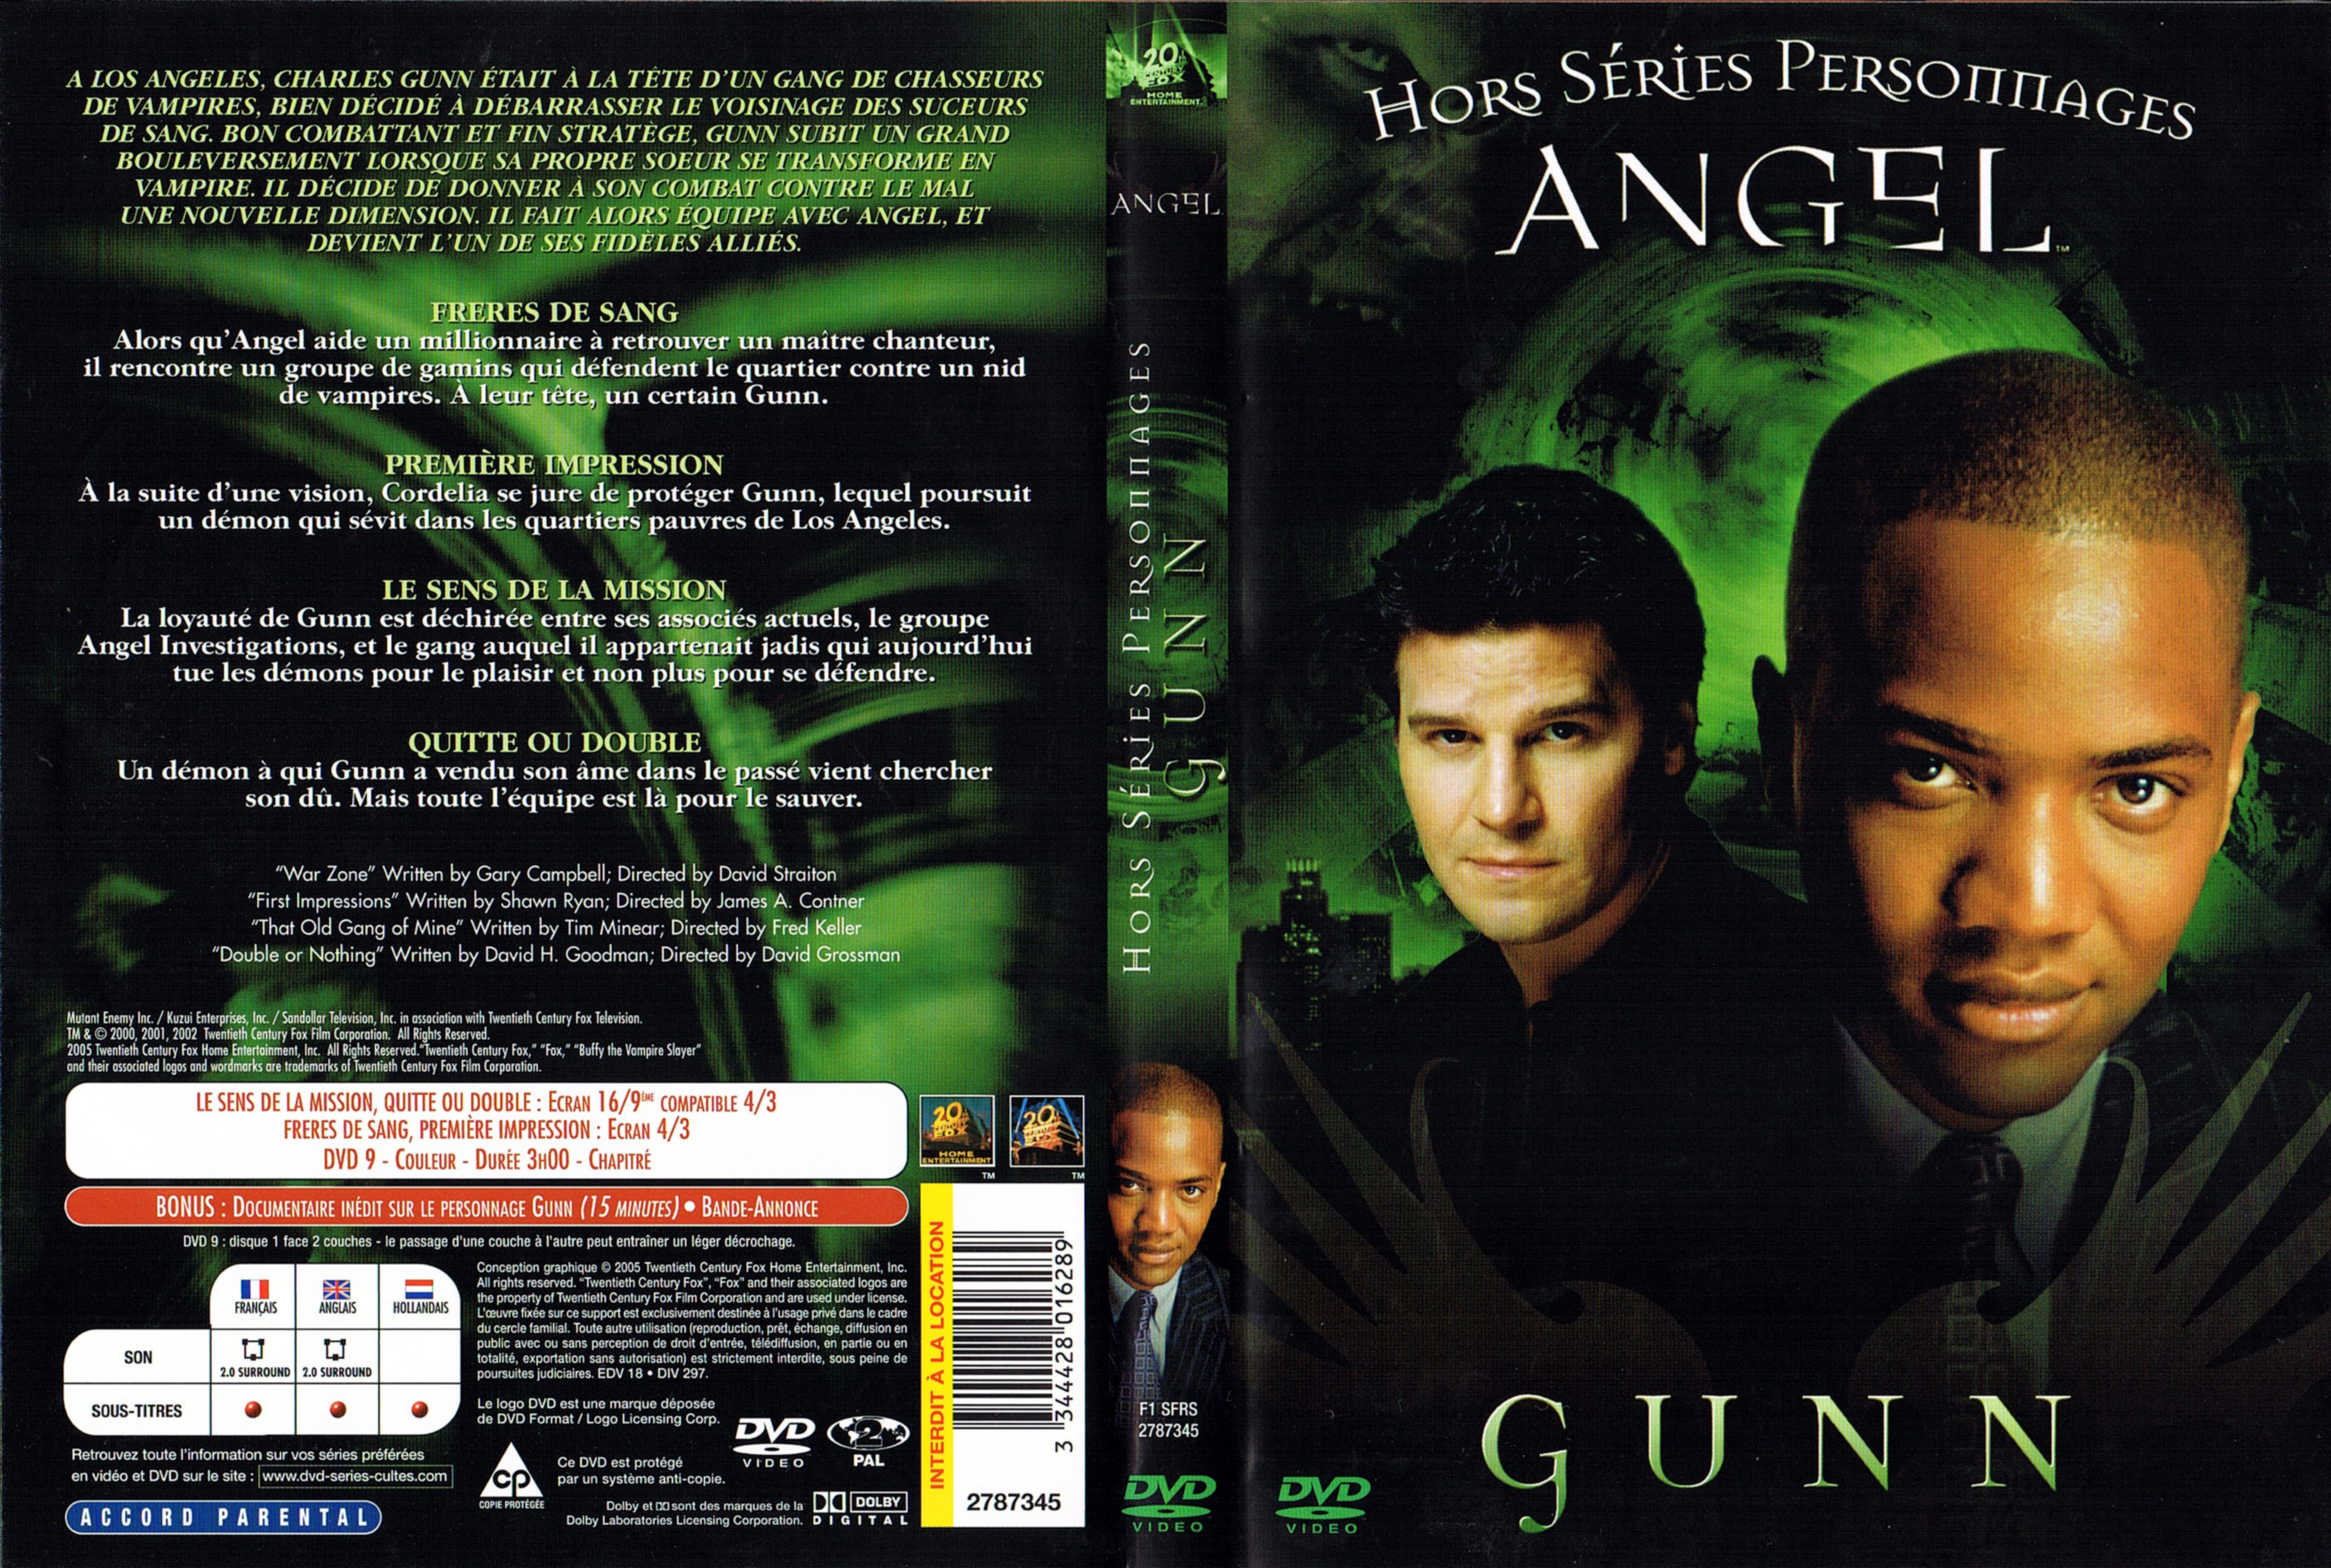 Jaquette DVD Angel Hors Series Personnages Gunn